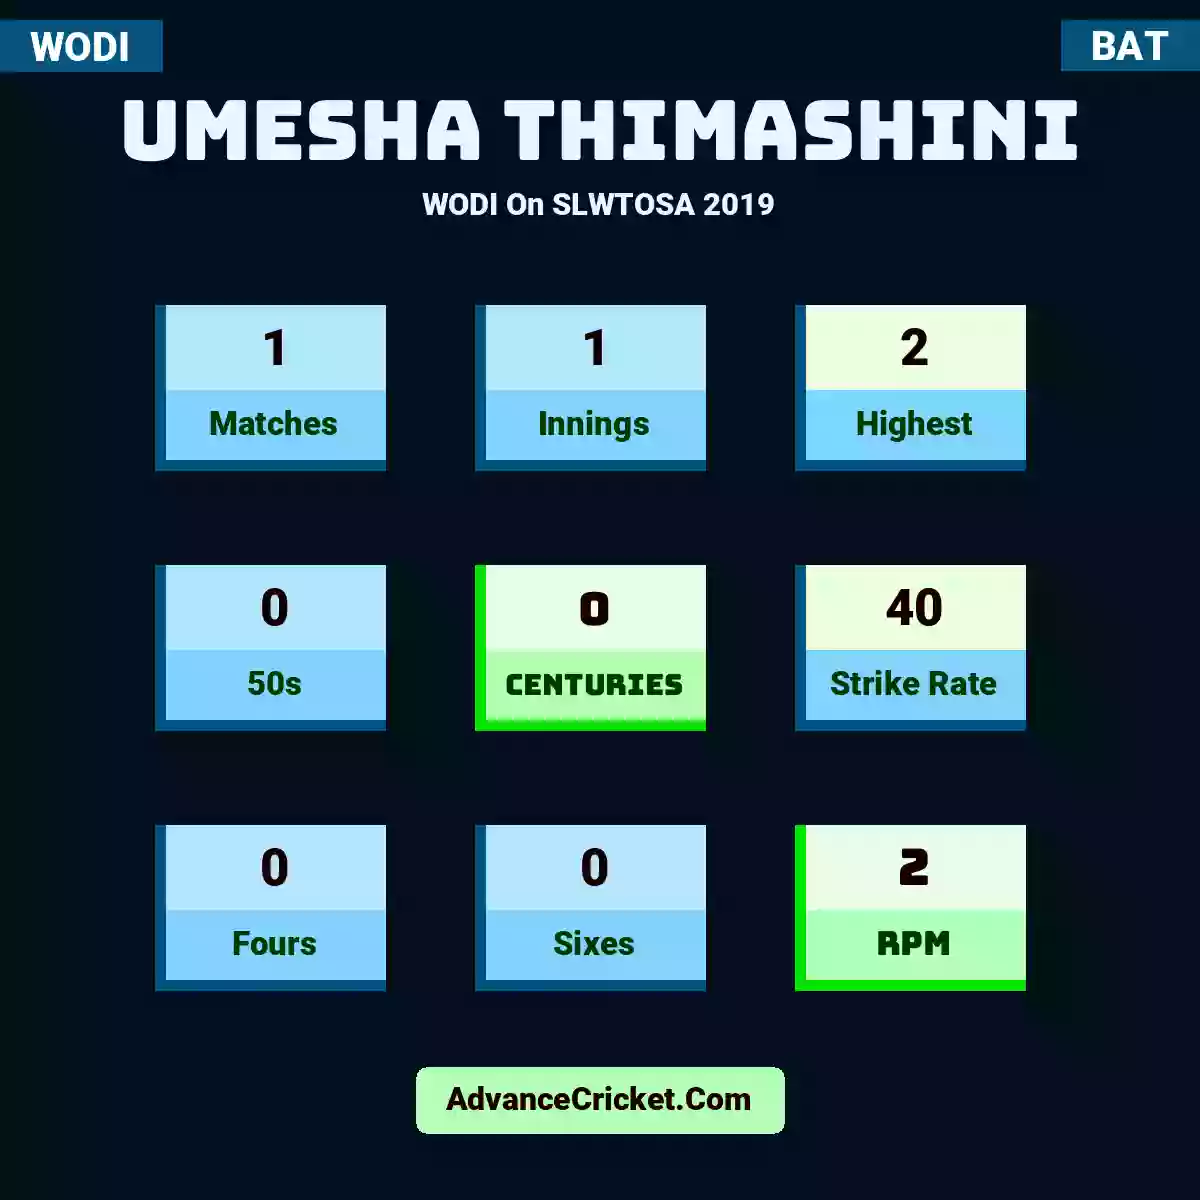 Umesha Thimashini WODI  On SLWTOSA 2019, Umesha Thimashini played 1 matches, scored 2 runs as highest, 0 half-centuries, and 0 centuries, with a strike rate of 40. U.Thimashini hit 0 fours and 0 sixes, with an RPM of 2.